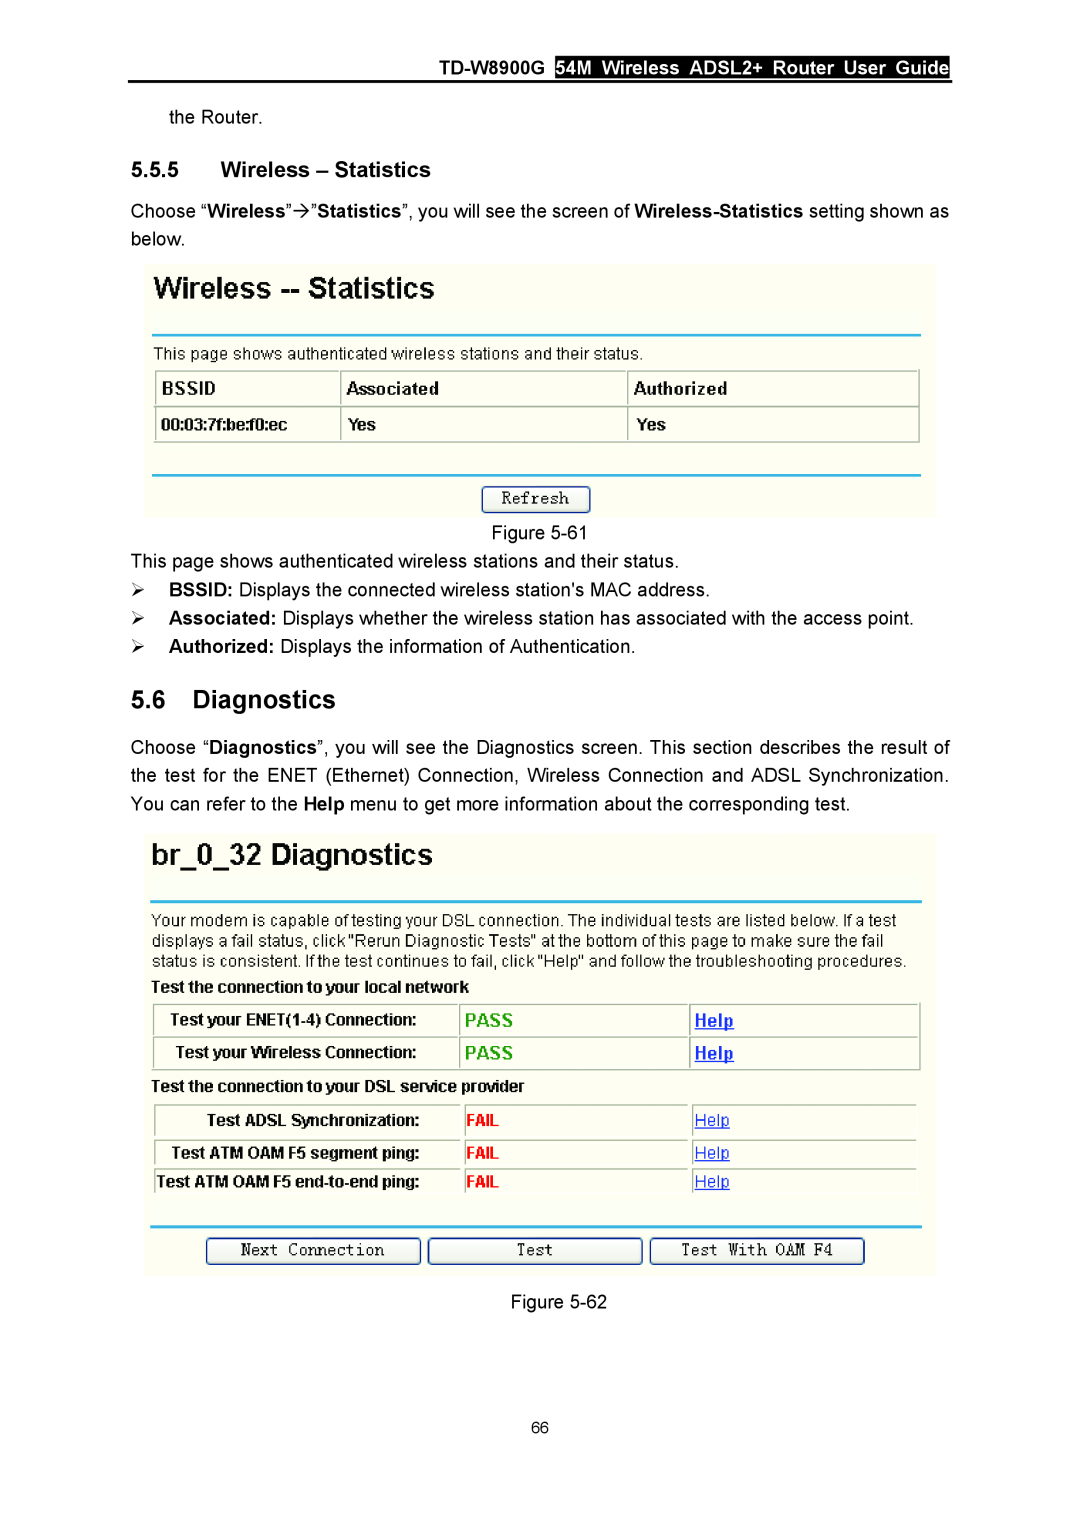 TP-Link manual Diagnostics, Wireless - Statistics, TD-W8900G 54M Wireless ADSL2+ Router User Guide 